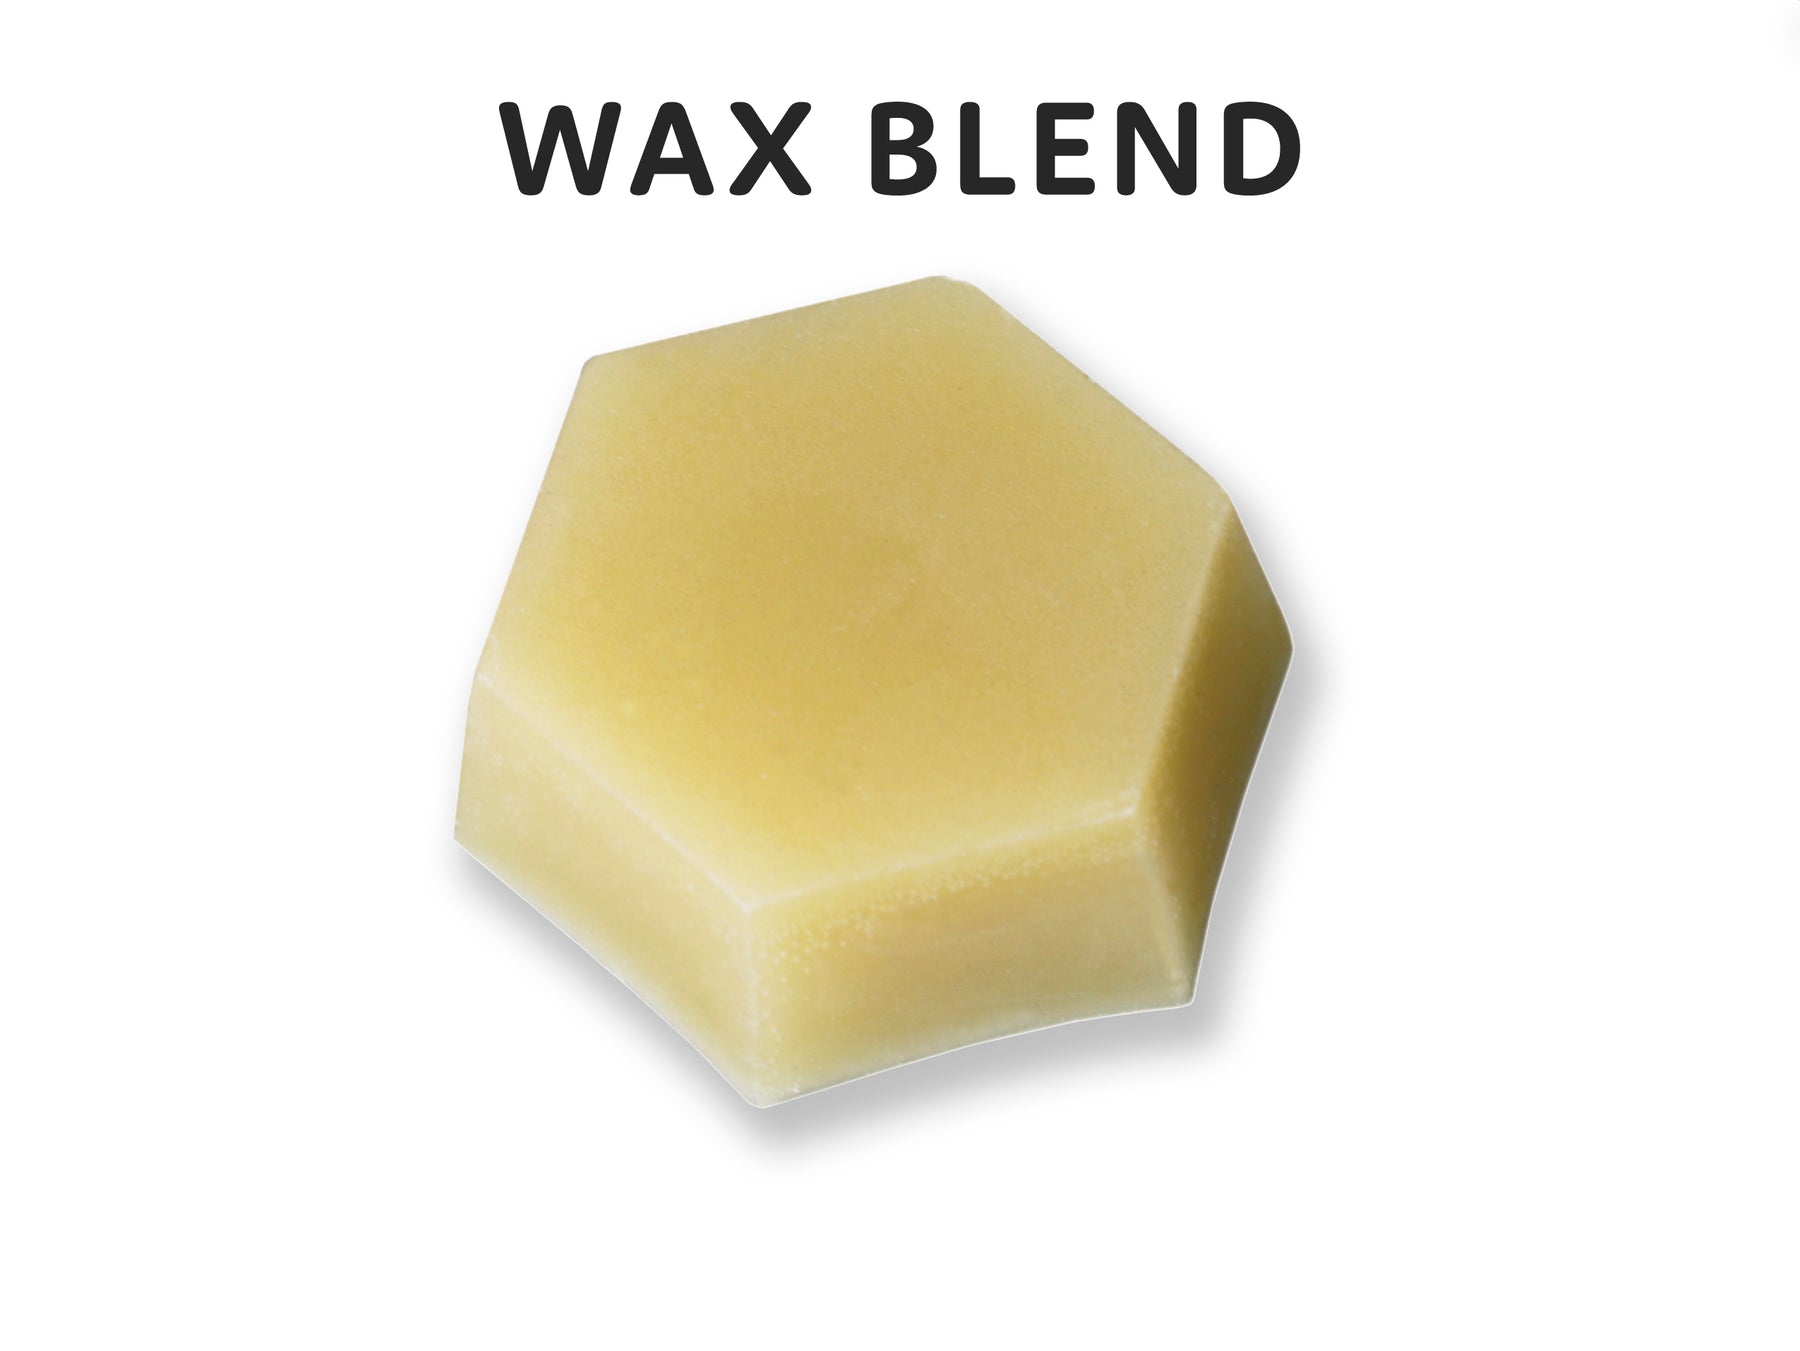 Paraffin Wax Block - Superior Blend, Versatile & Effective - 1lb. - 2 Blocks